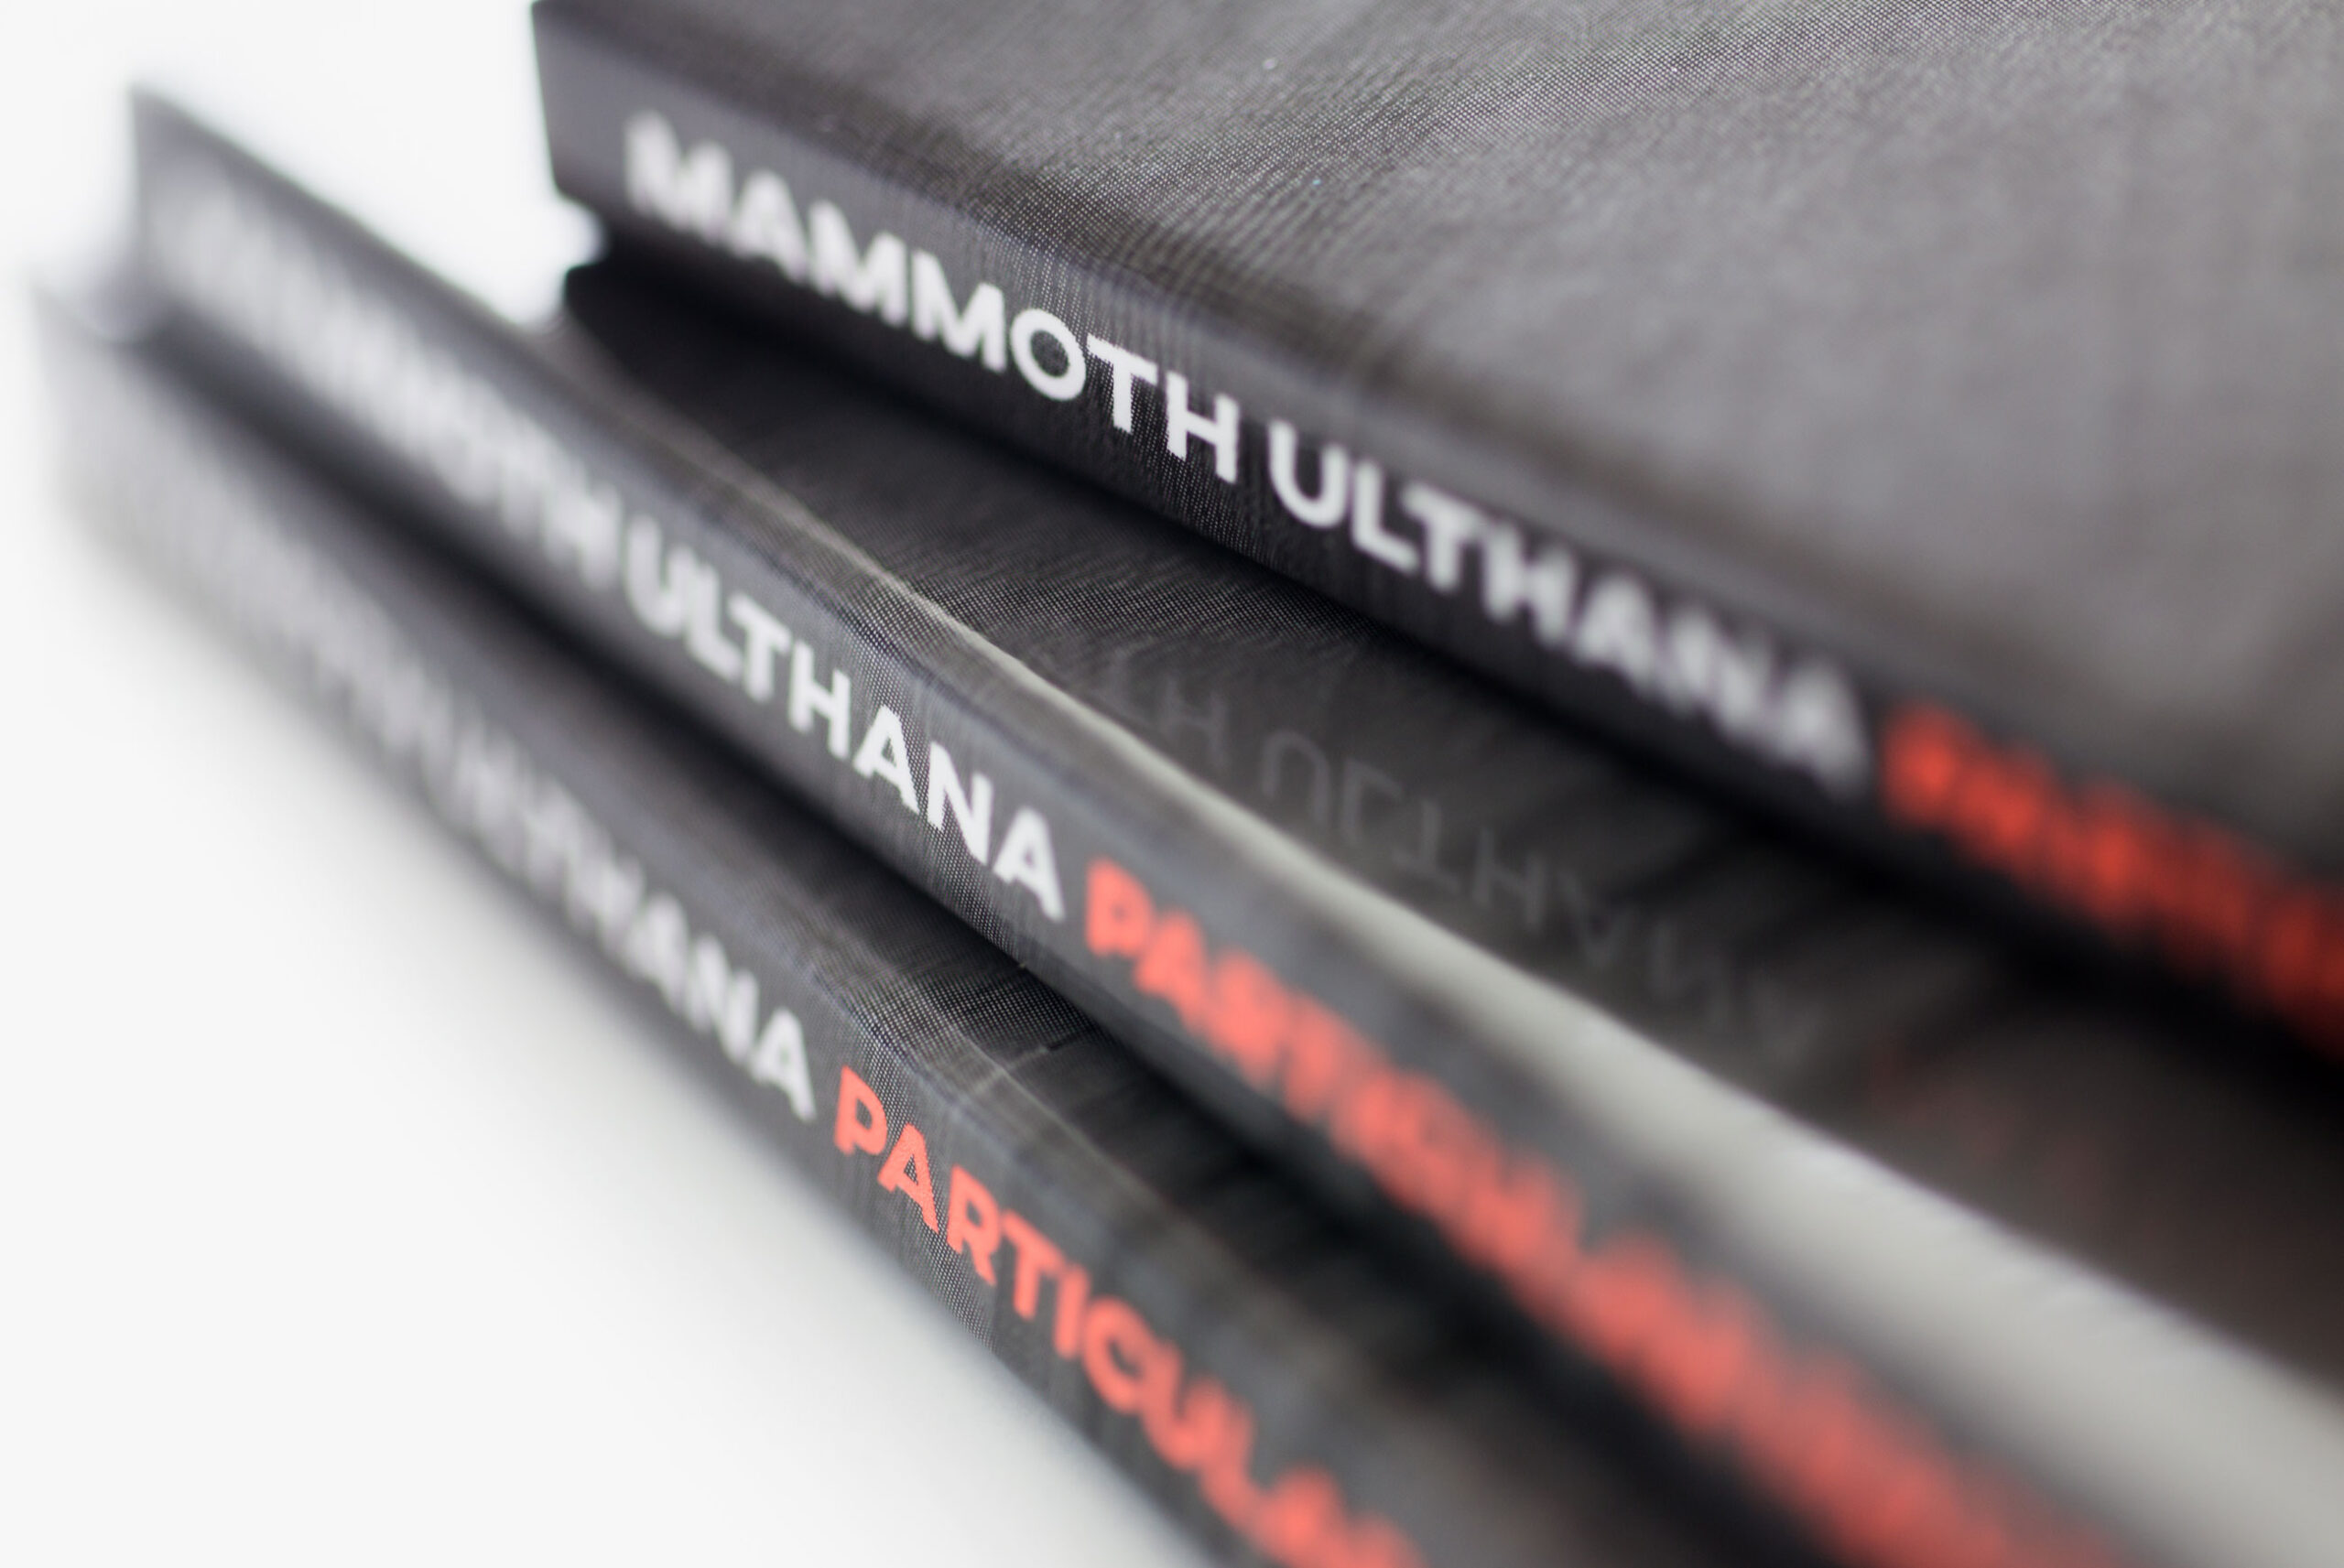 Jacek Doroszenko and Rafał Kołacki - Mammoth Ulthana, Particular Factors, album detail 3